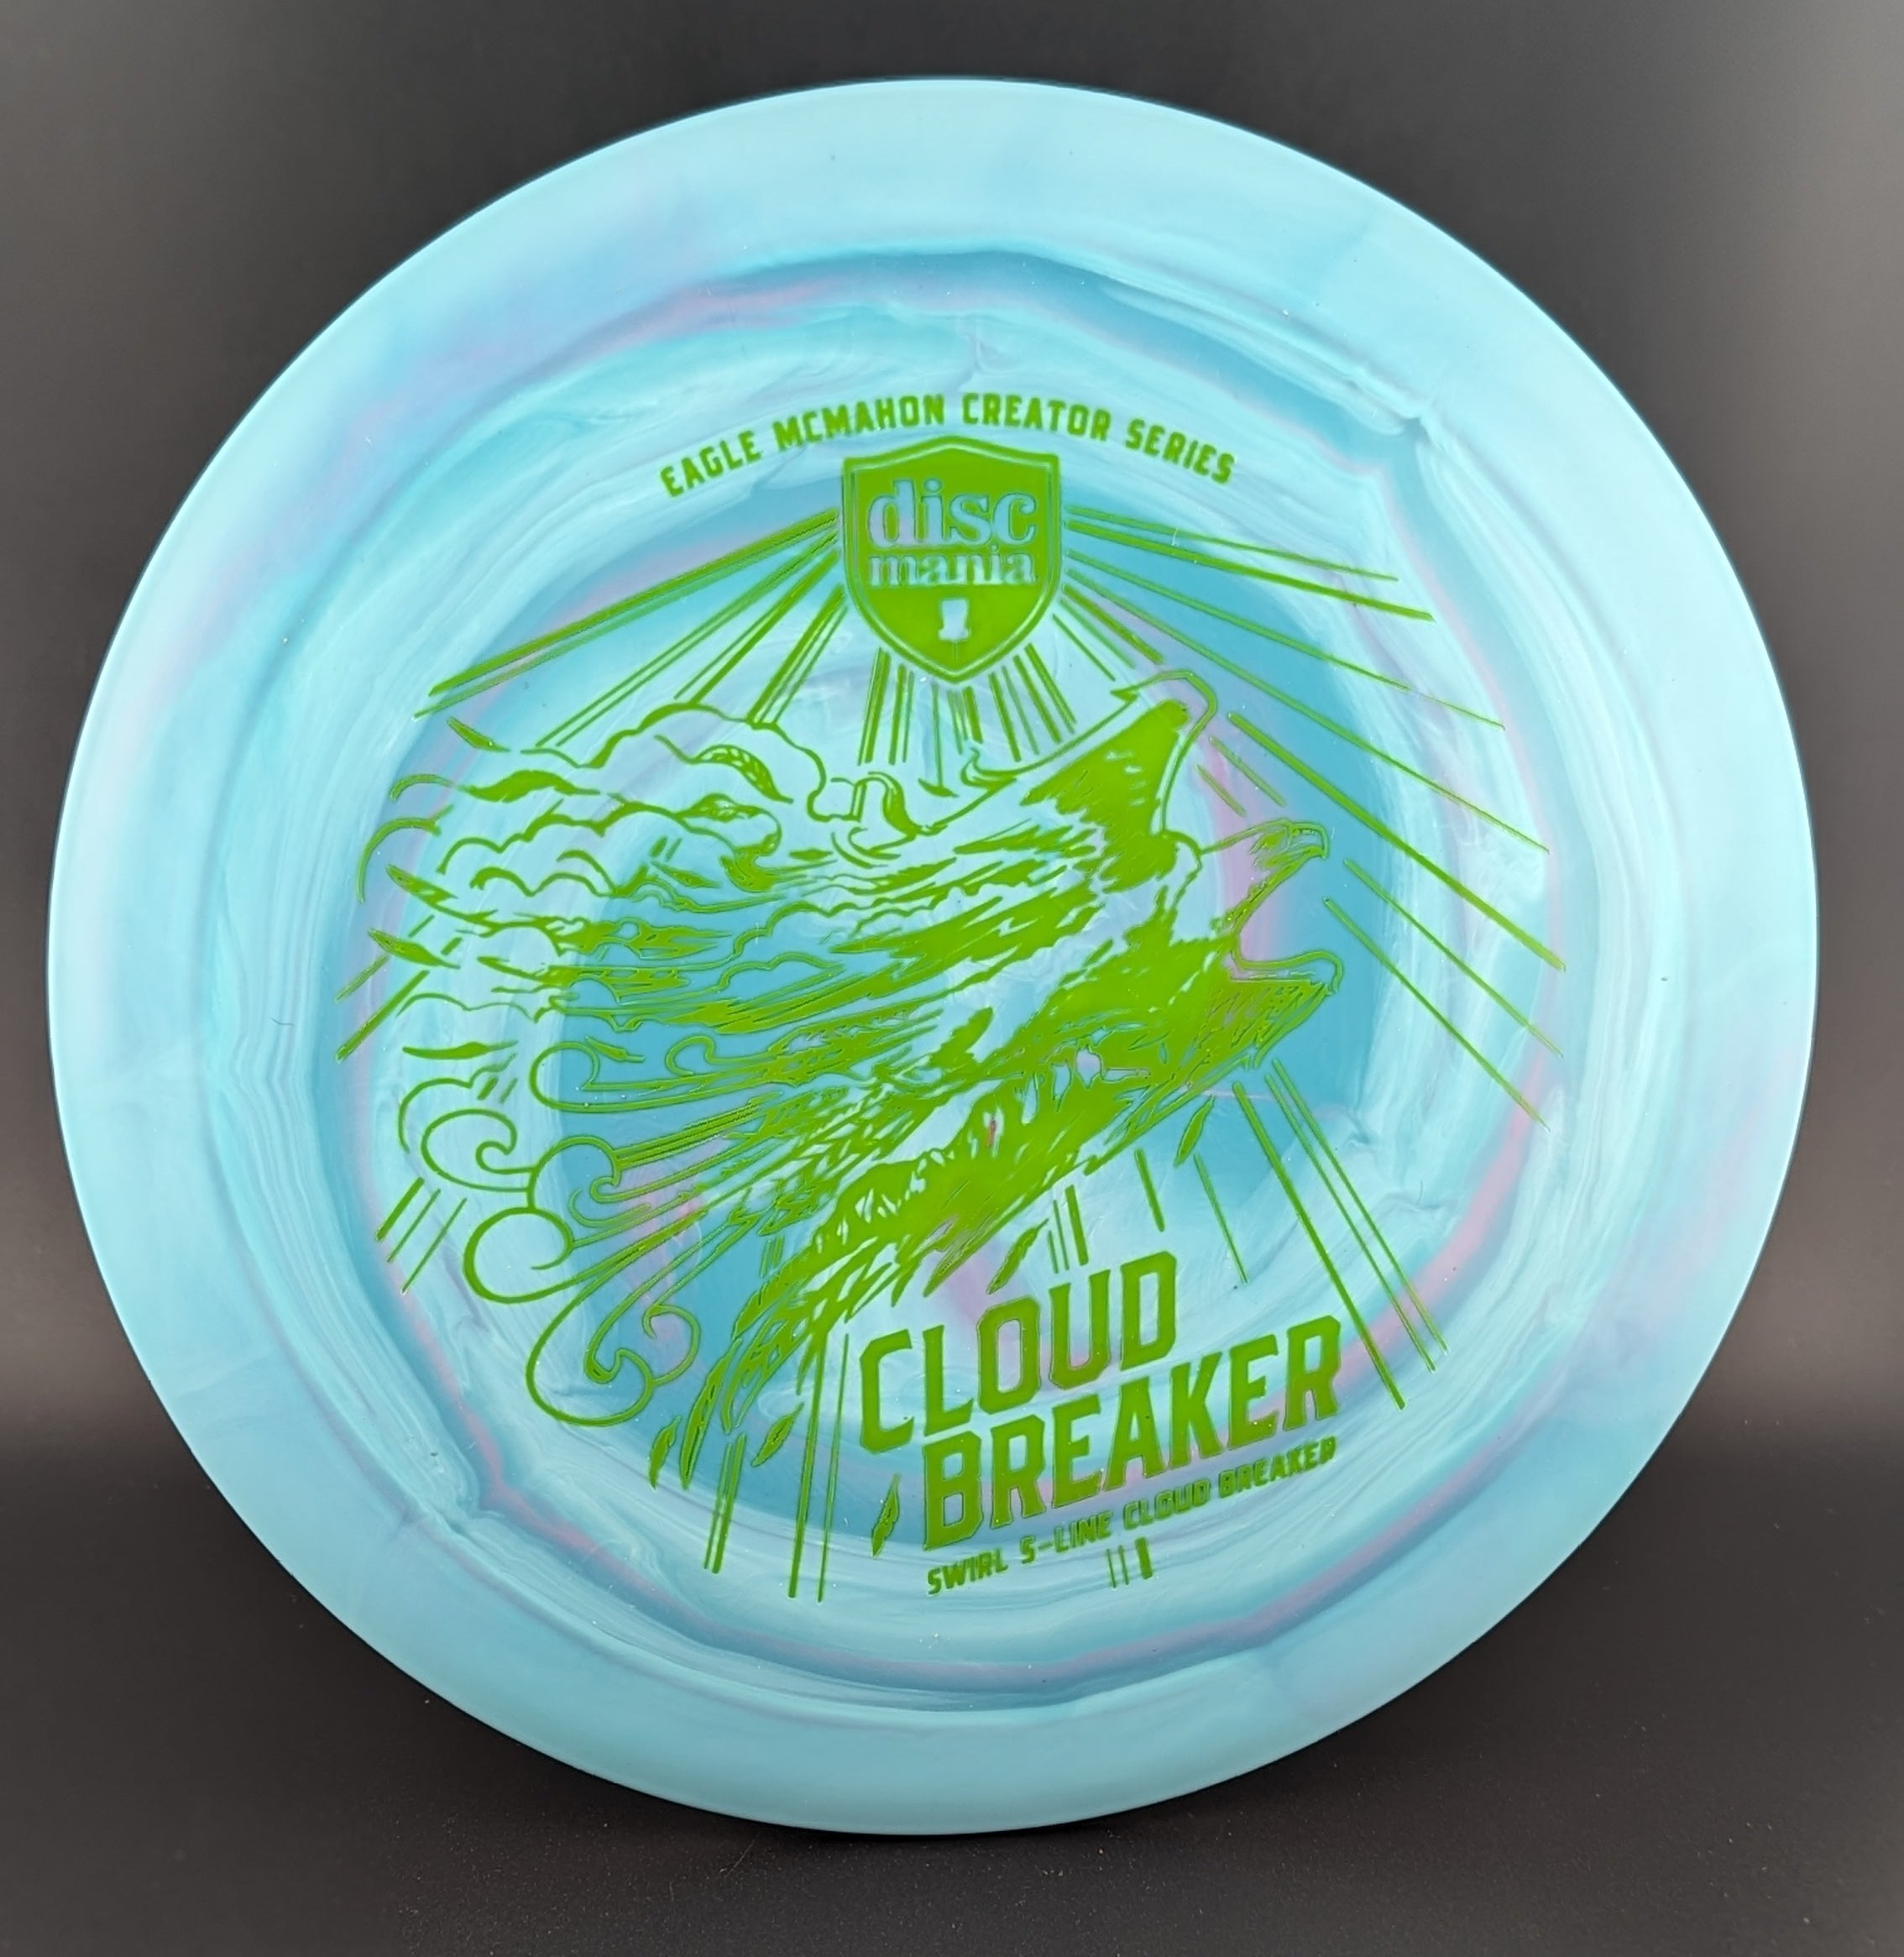 Last Call Eagle McMahon Creator Series Cloud Breaker